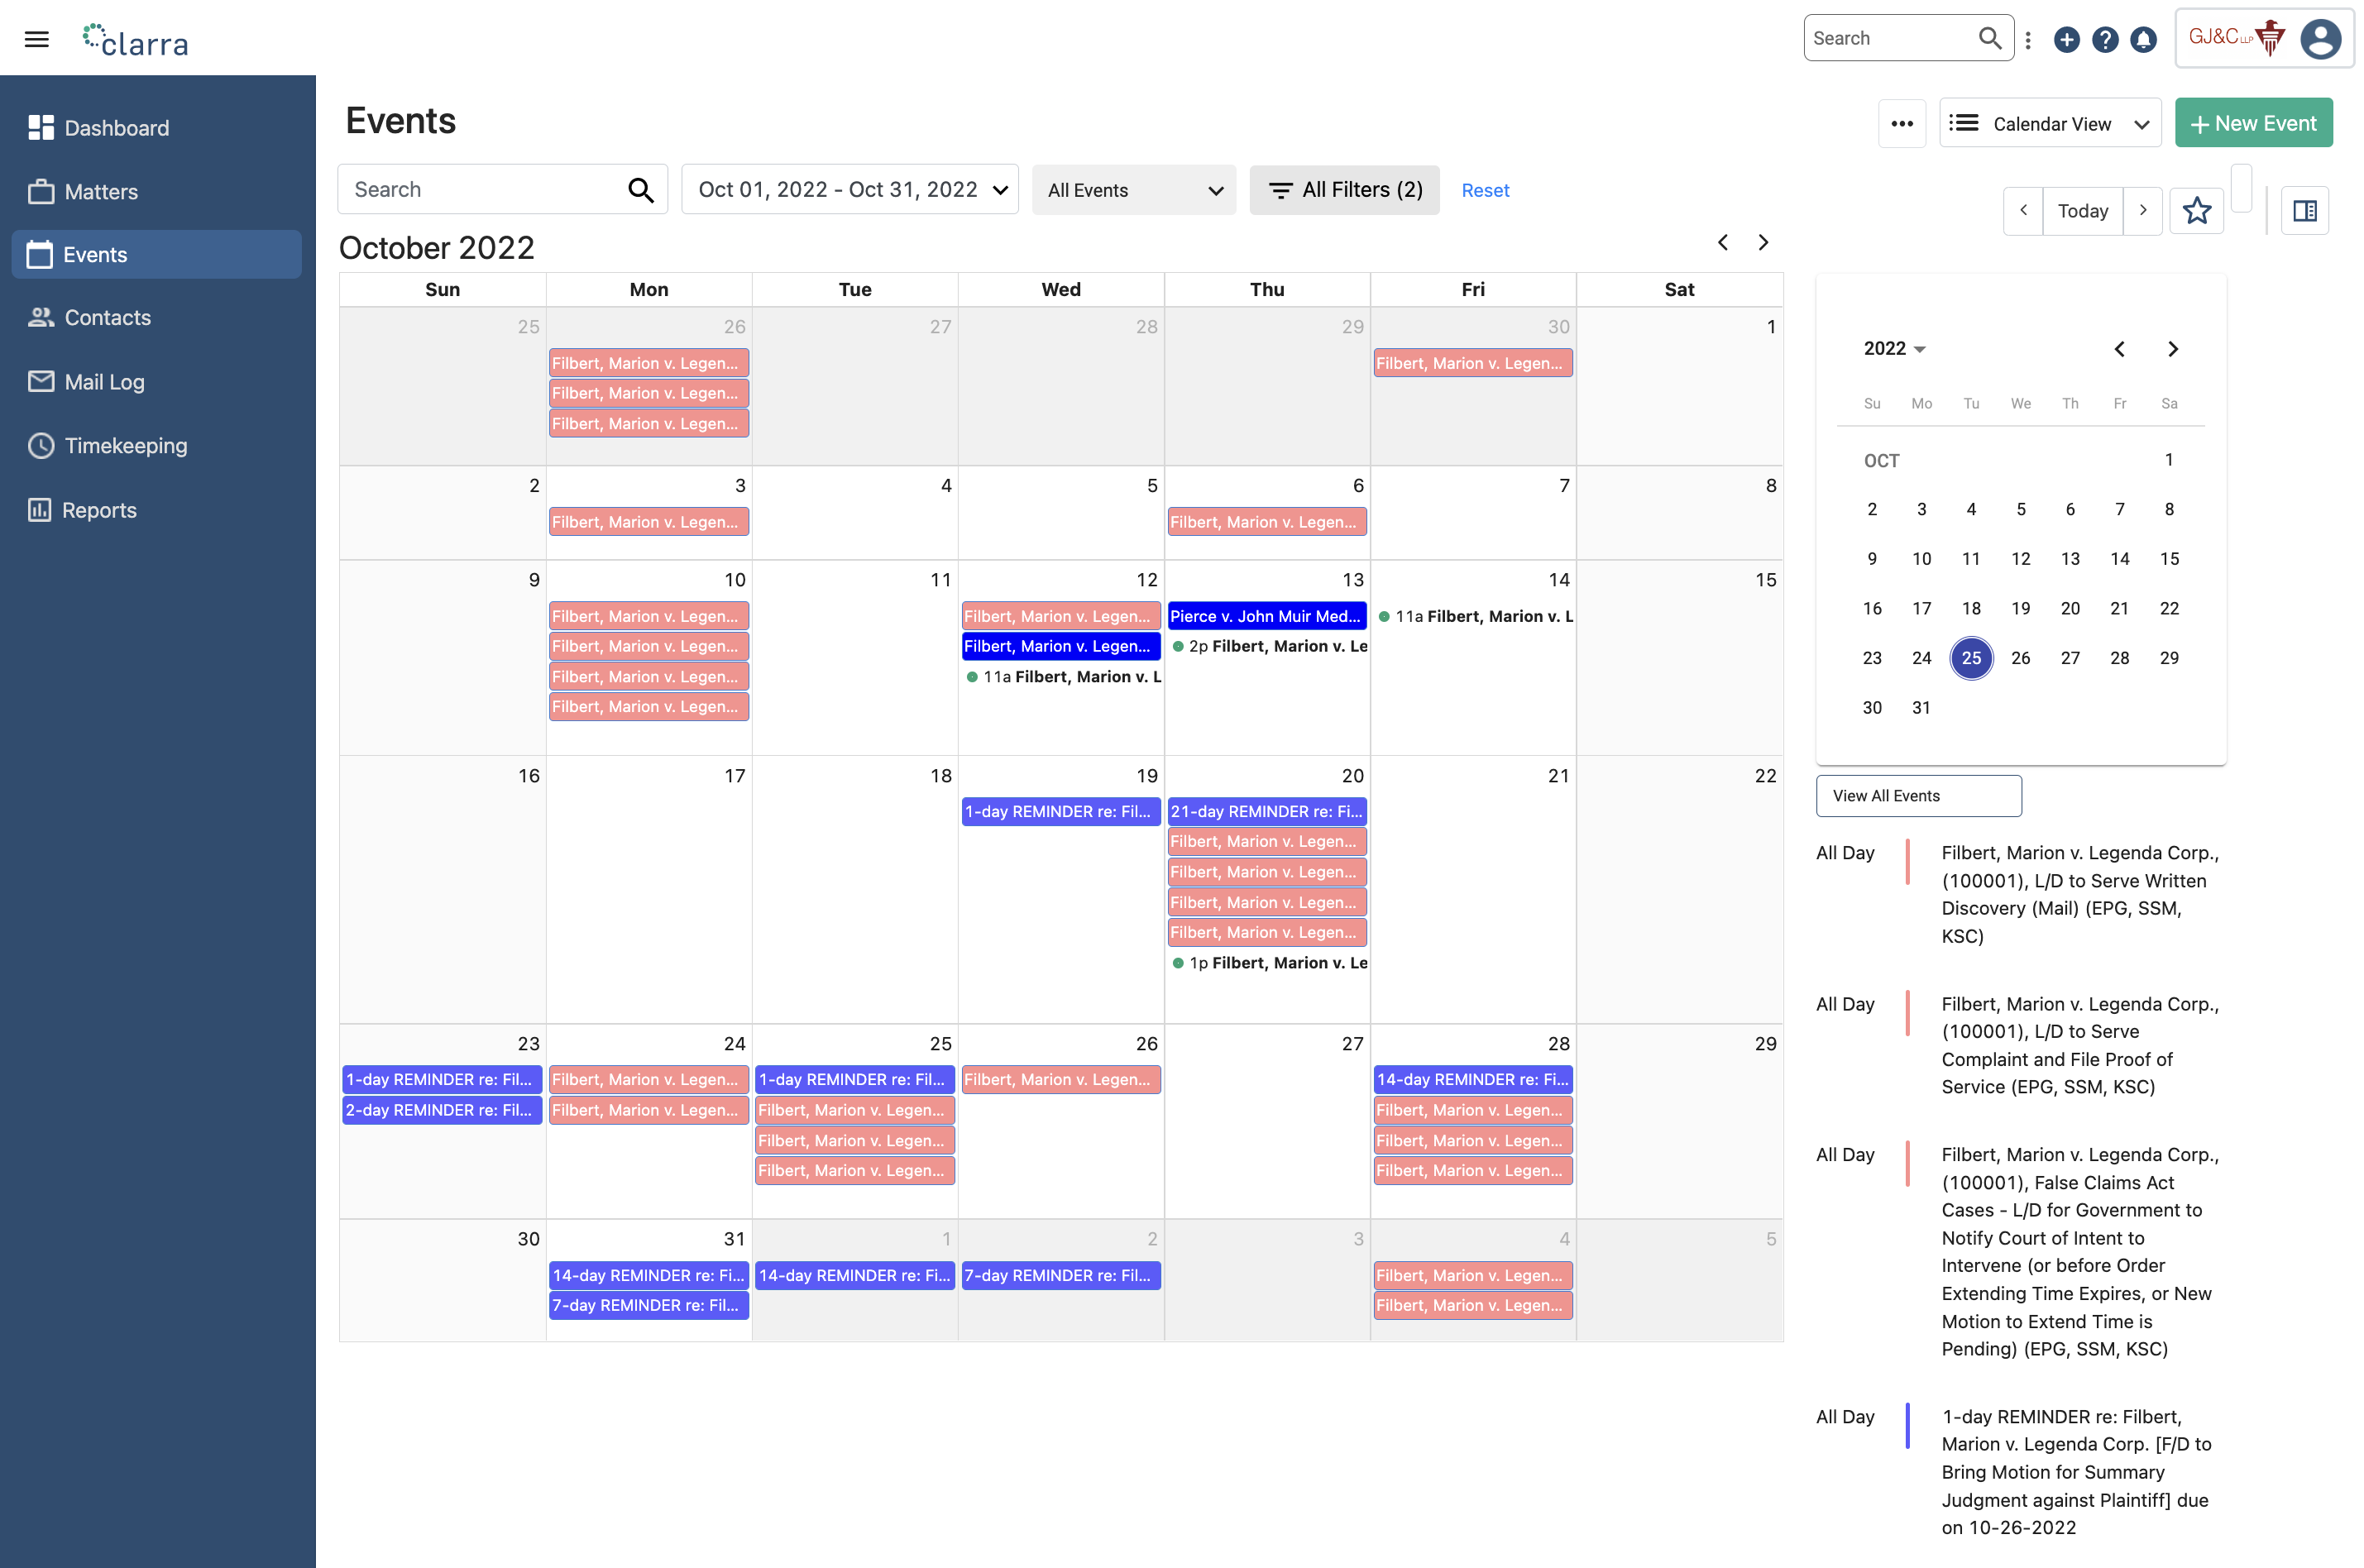 Clarra event calendar view